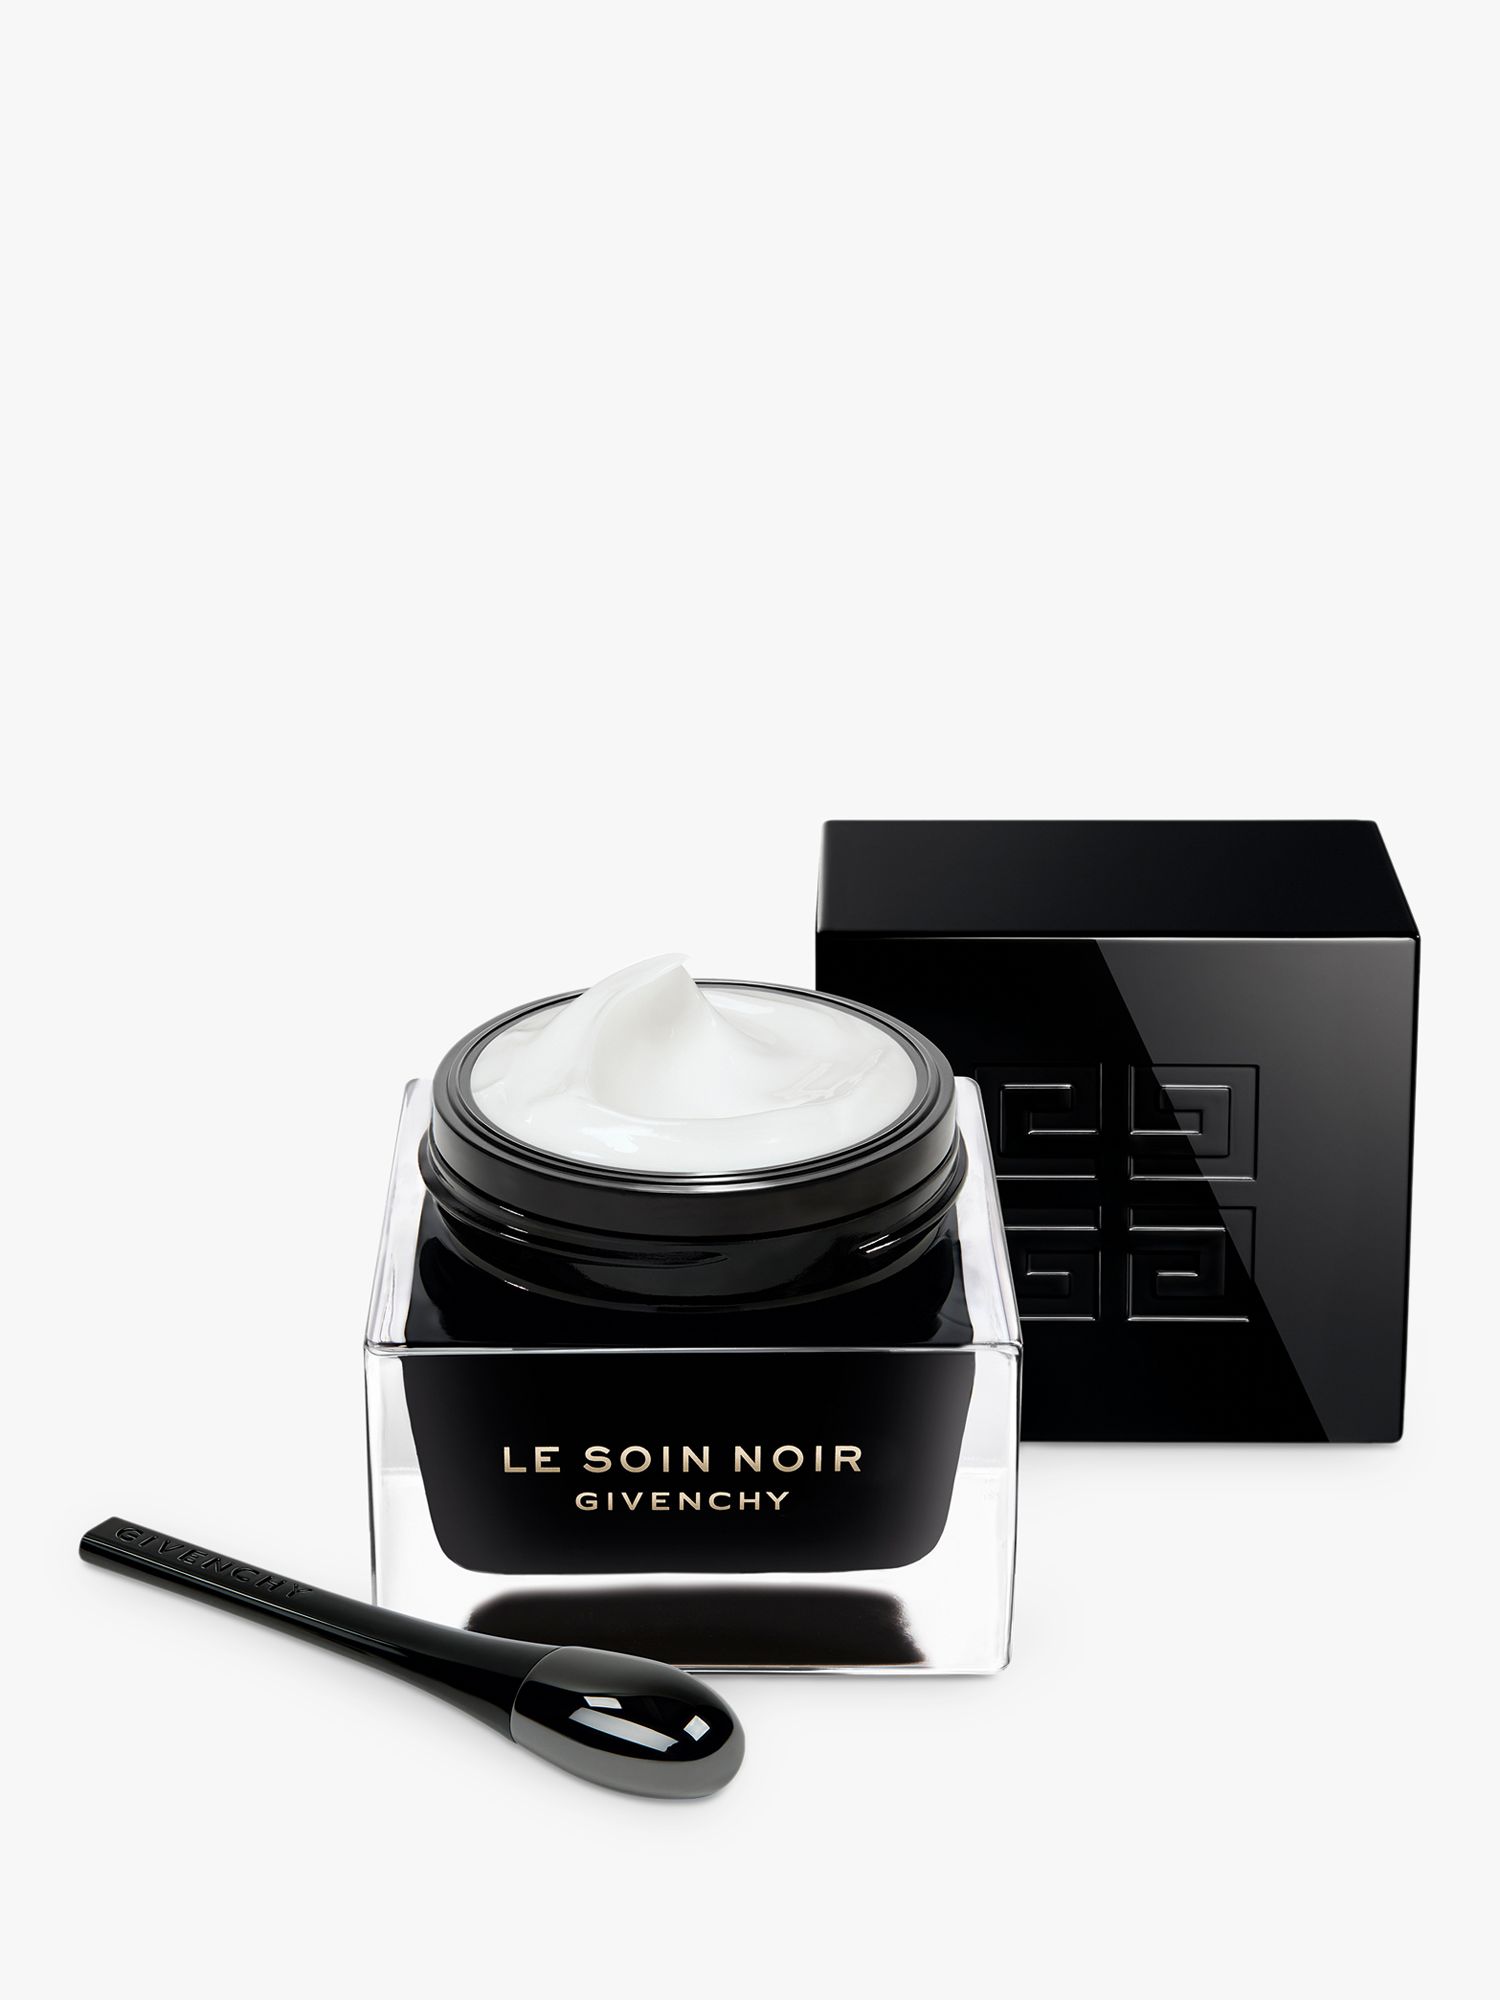 Givenchy Le Soin Noir Light Day Cream, 50ml 2